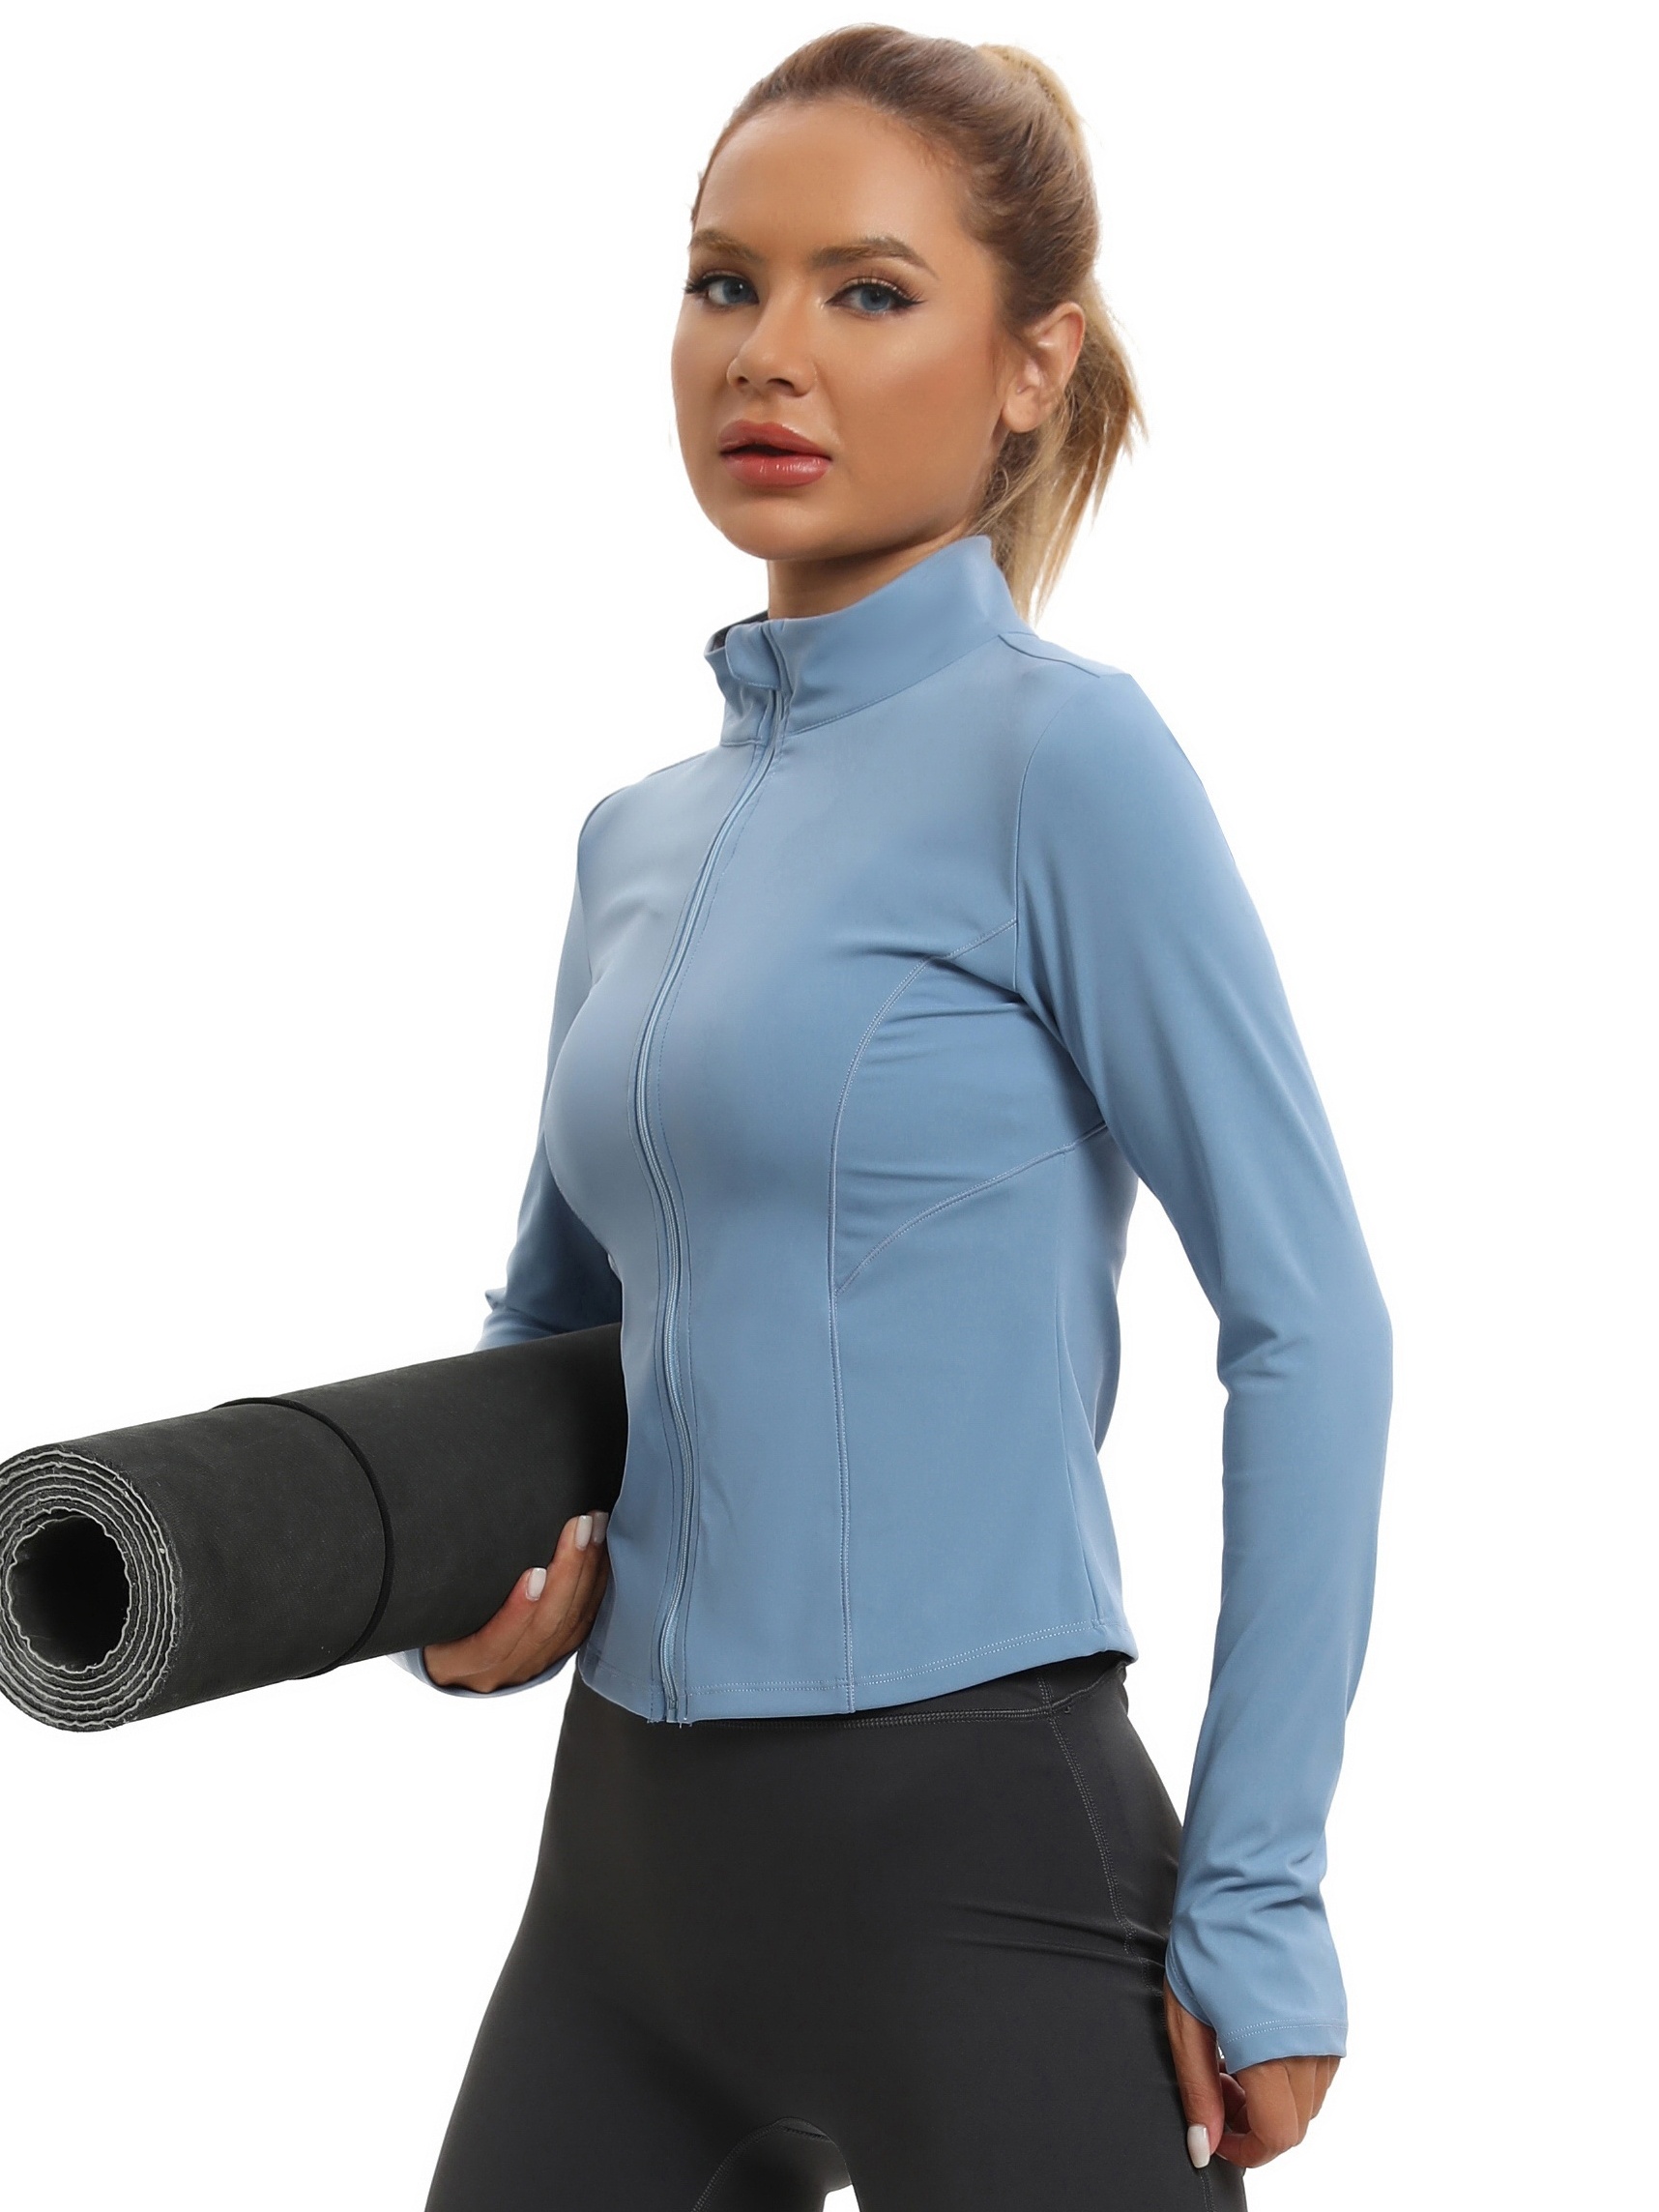 Women Yoga Shirts Solid Sport Crop Top Fashion T Shirt Gym Workout T-shirts  Short Sleeve Fitness Fast Dry Sportswear